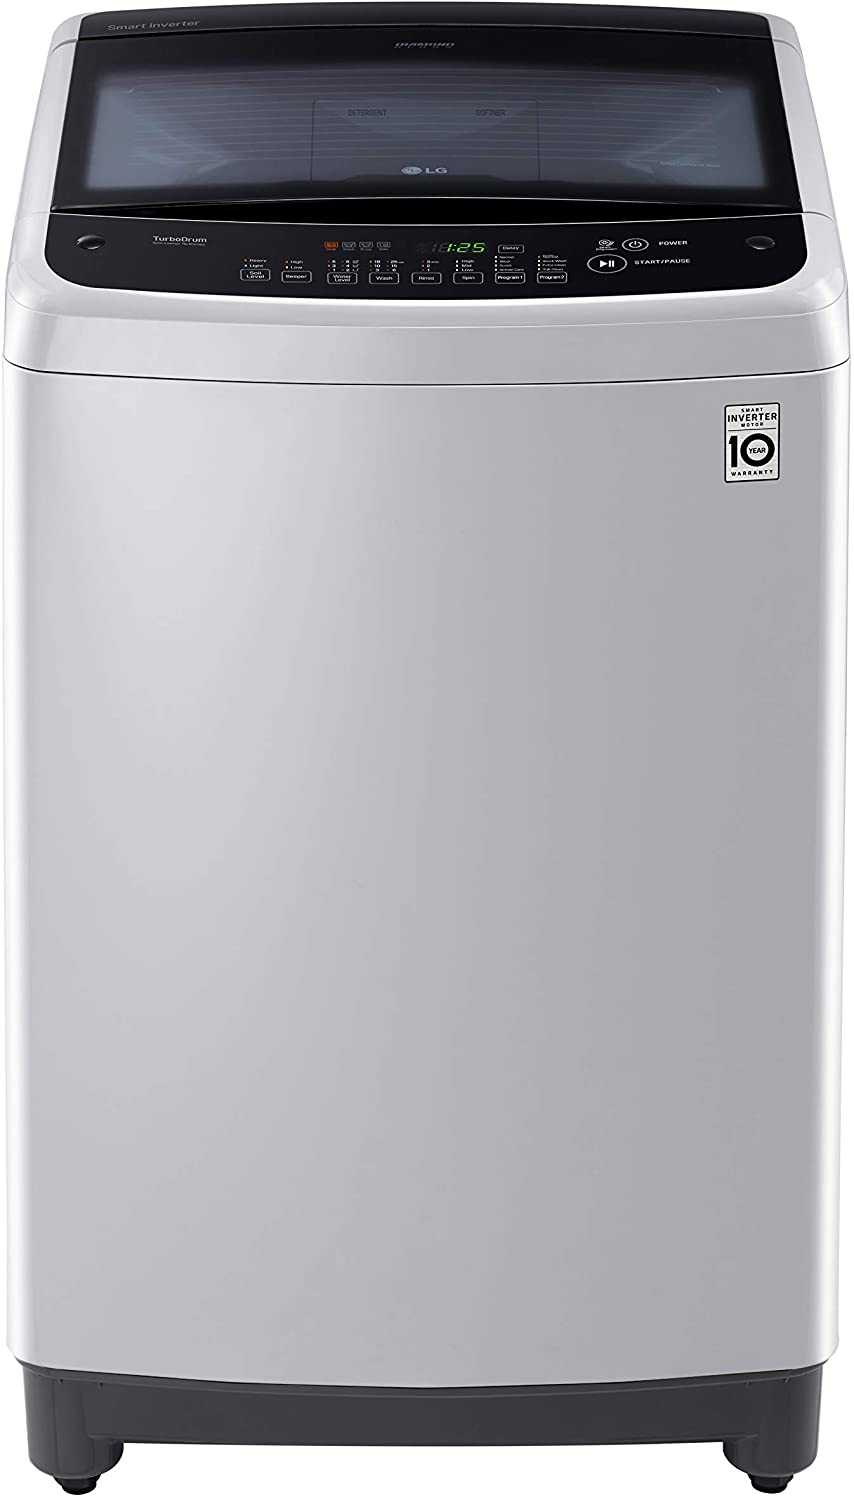 LG 12 Kg Top Load Washing Machine, Silver - T1788NEHTE